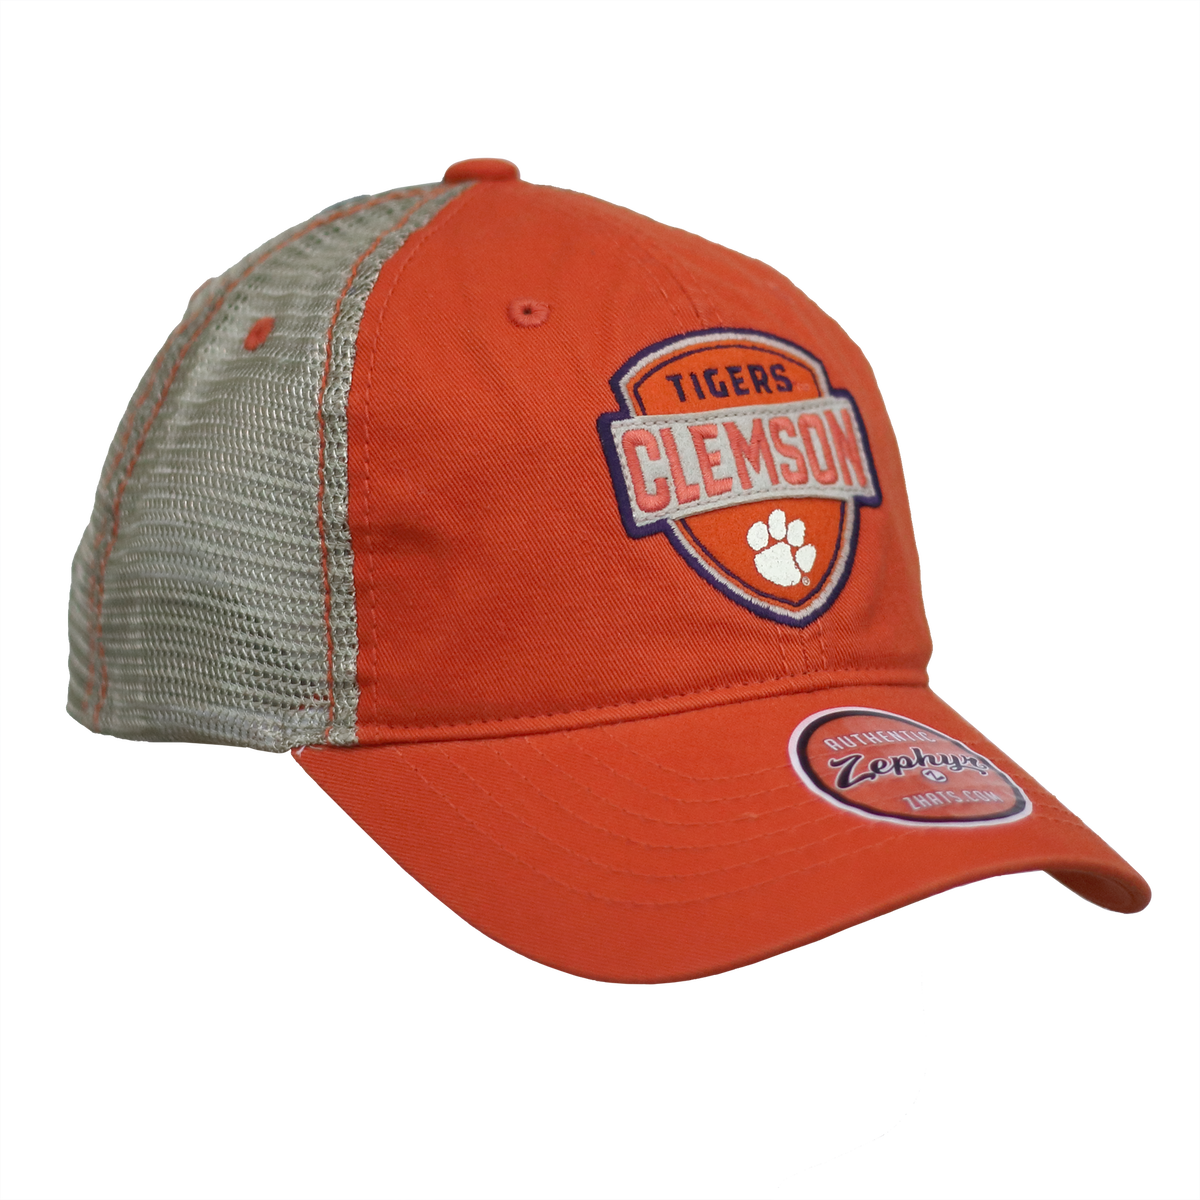 Clemson Dunbar Snapback Adjustable Hat